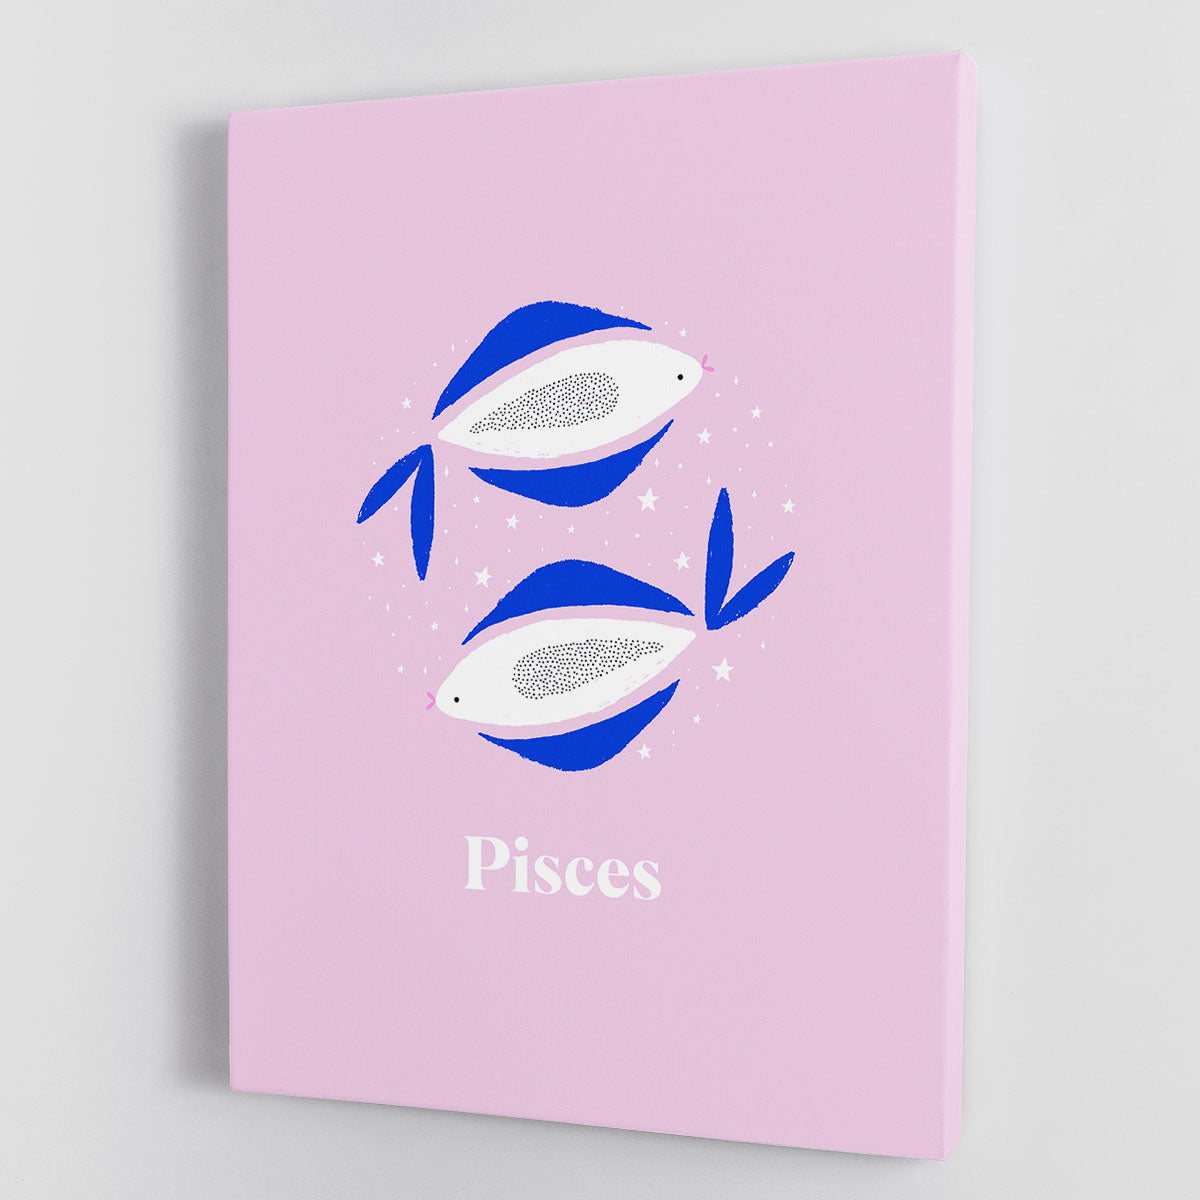 Pisces Inspirational Art Canvas Print or Poster - Canvas Art Rocks - 1